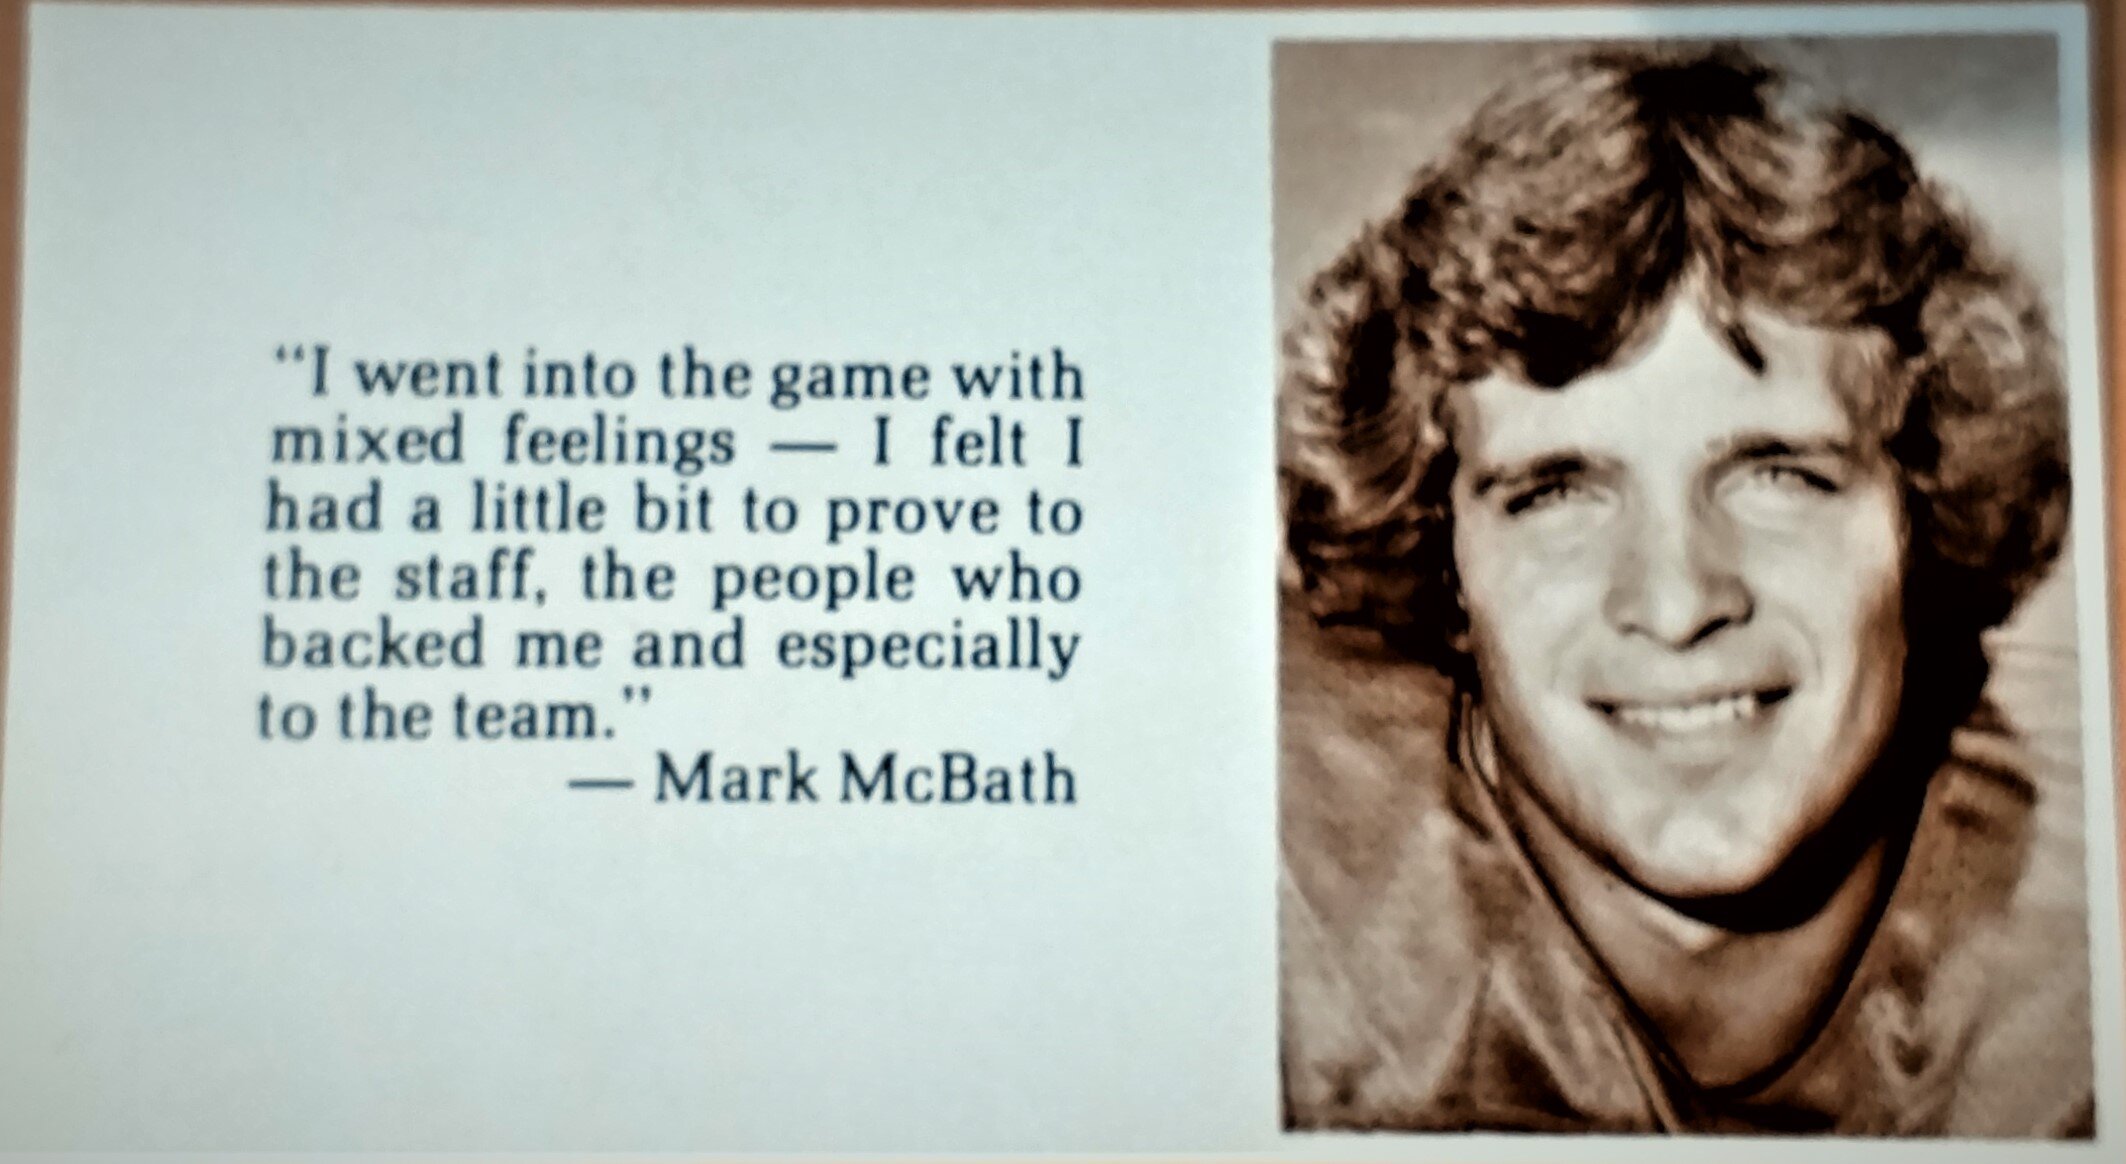 Mark McBath started 10 games winning 8 and losing 2 ; winning percentage .800